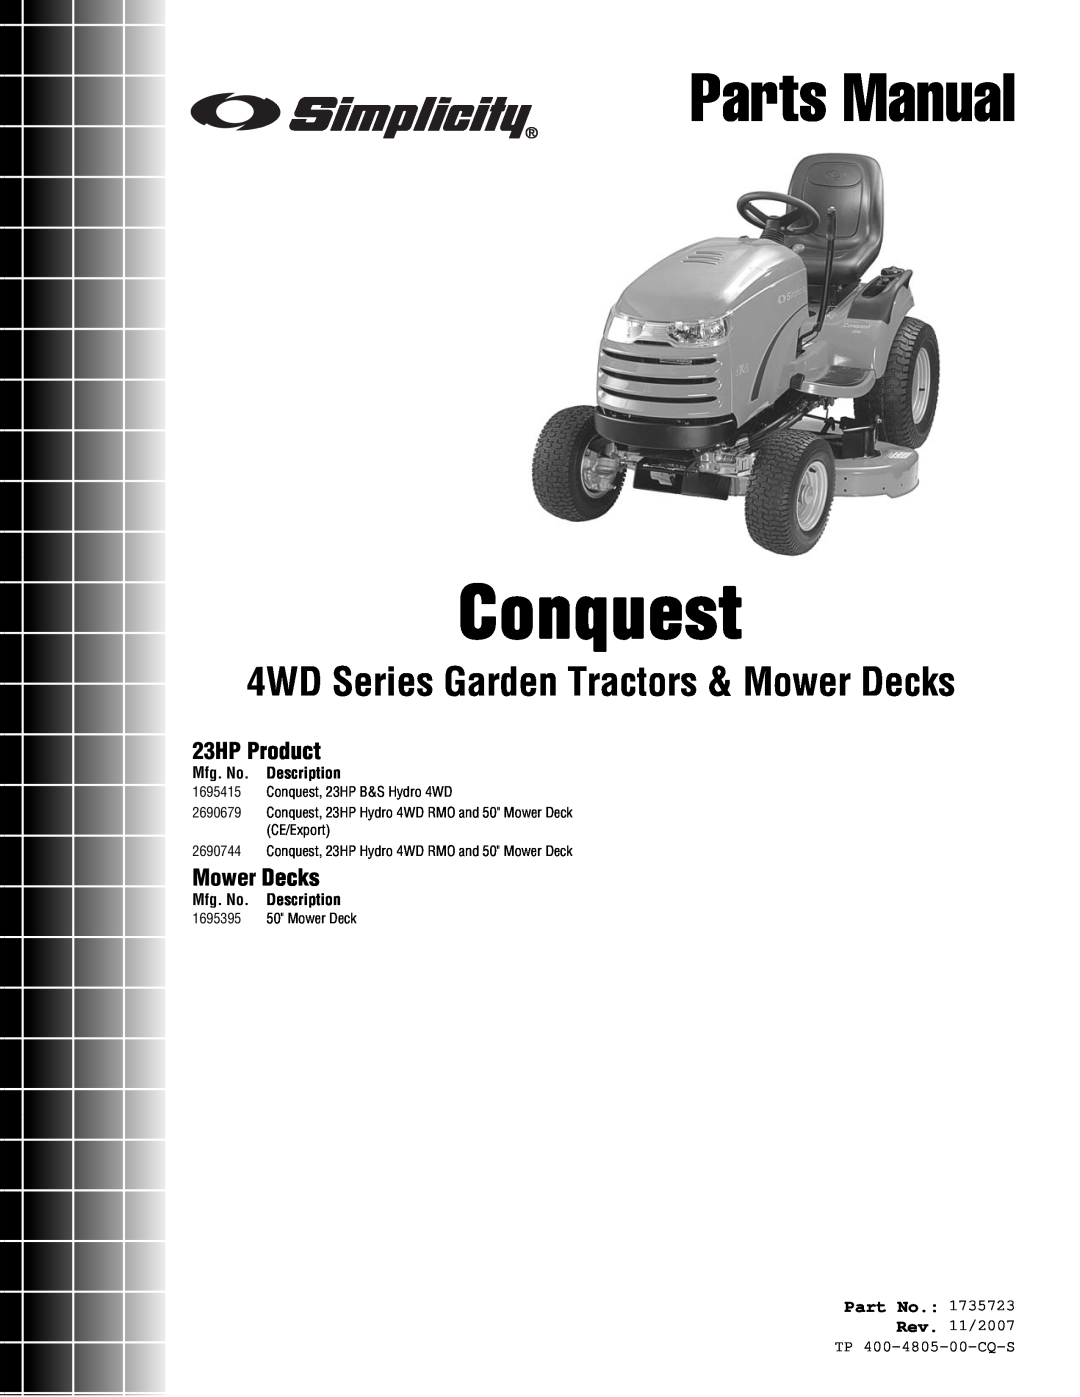 Simplicity 4WD Series manual 23HP Product, Mower Decks, Mfg. No. Description, Conquest, Parts Manual, Rev. 11/2007 